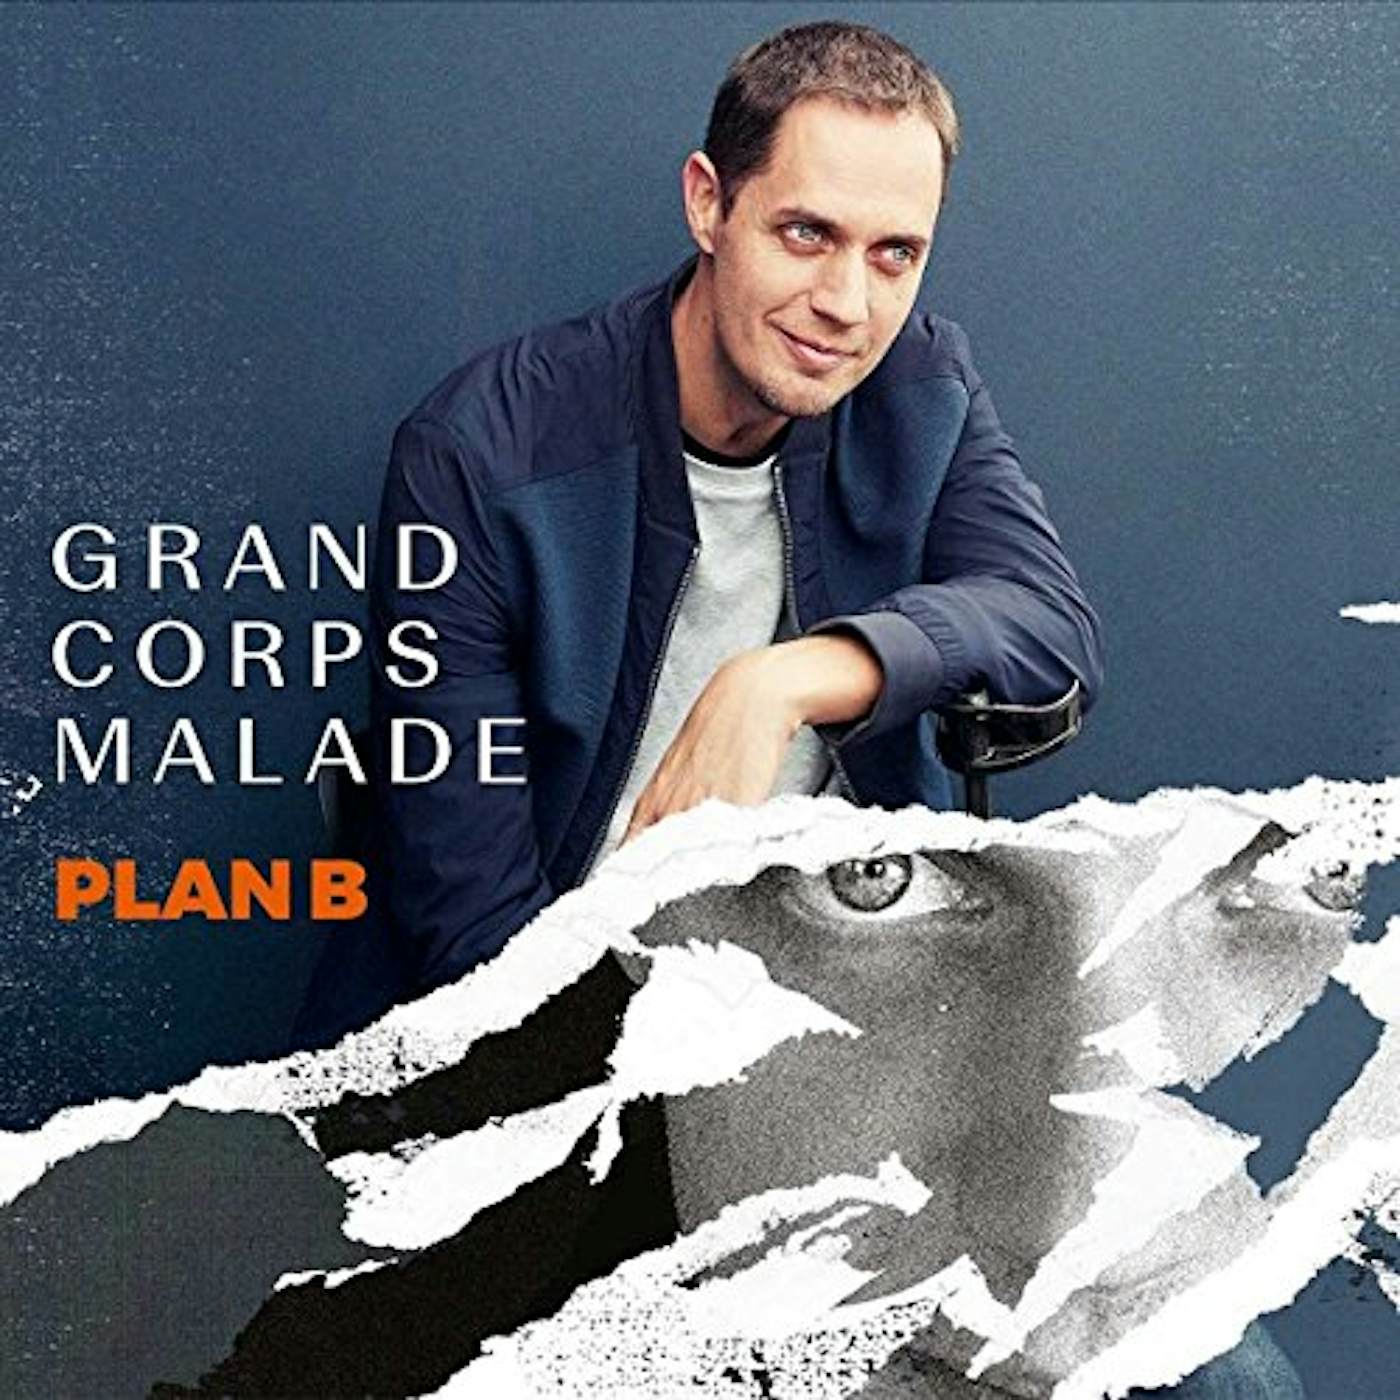 Grand Corps Malade PLAN B CD